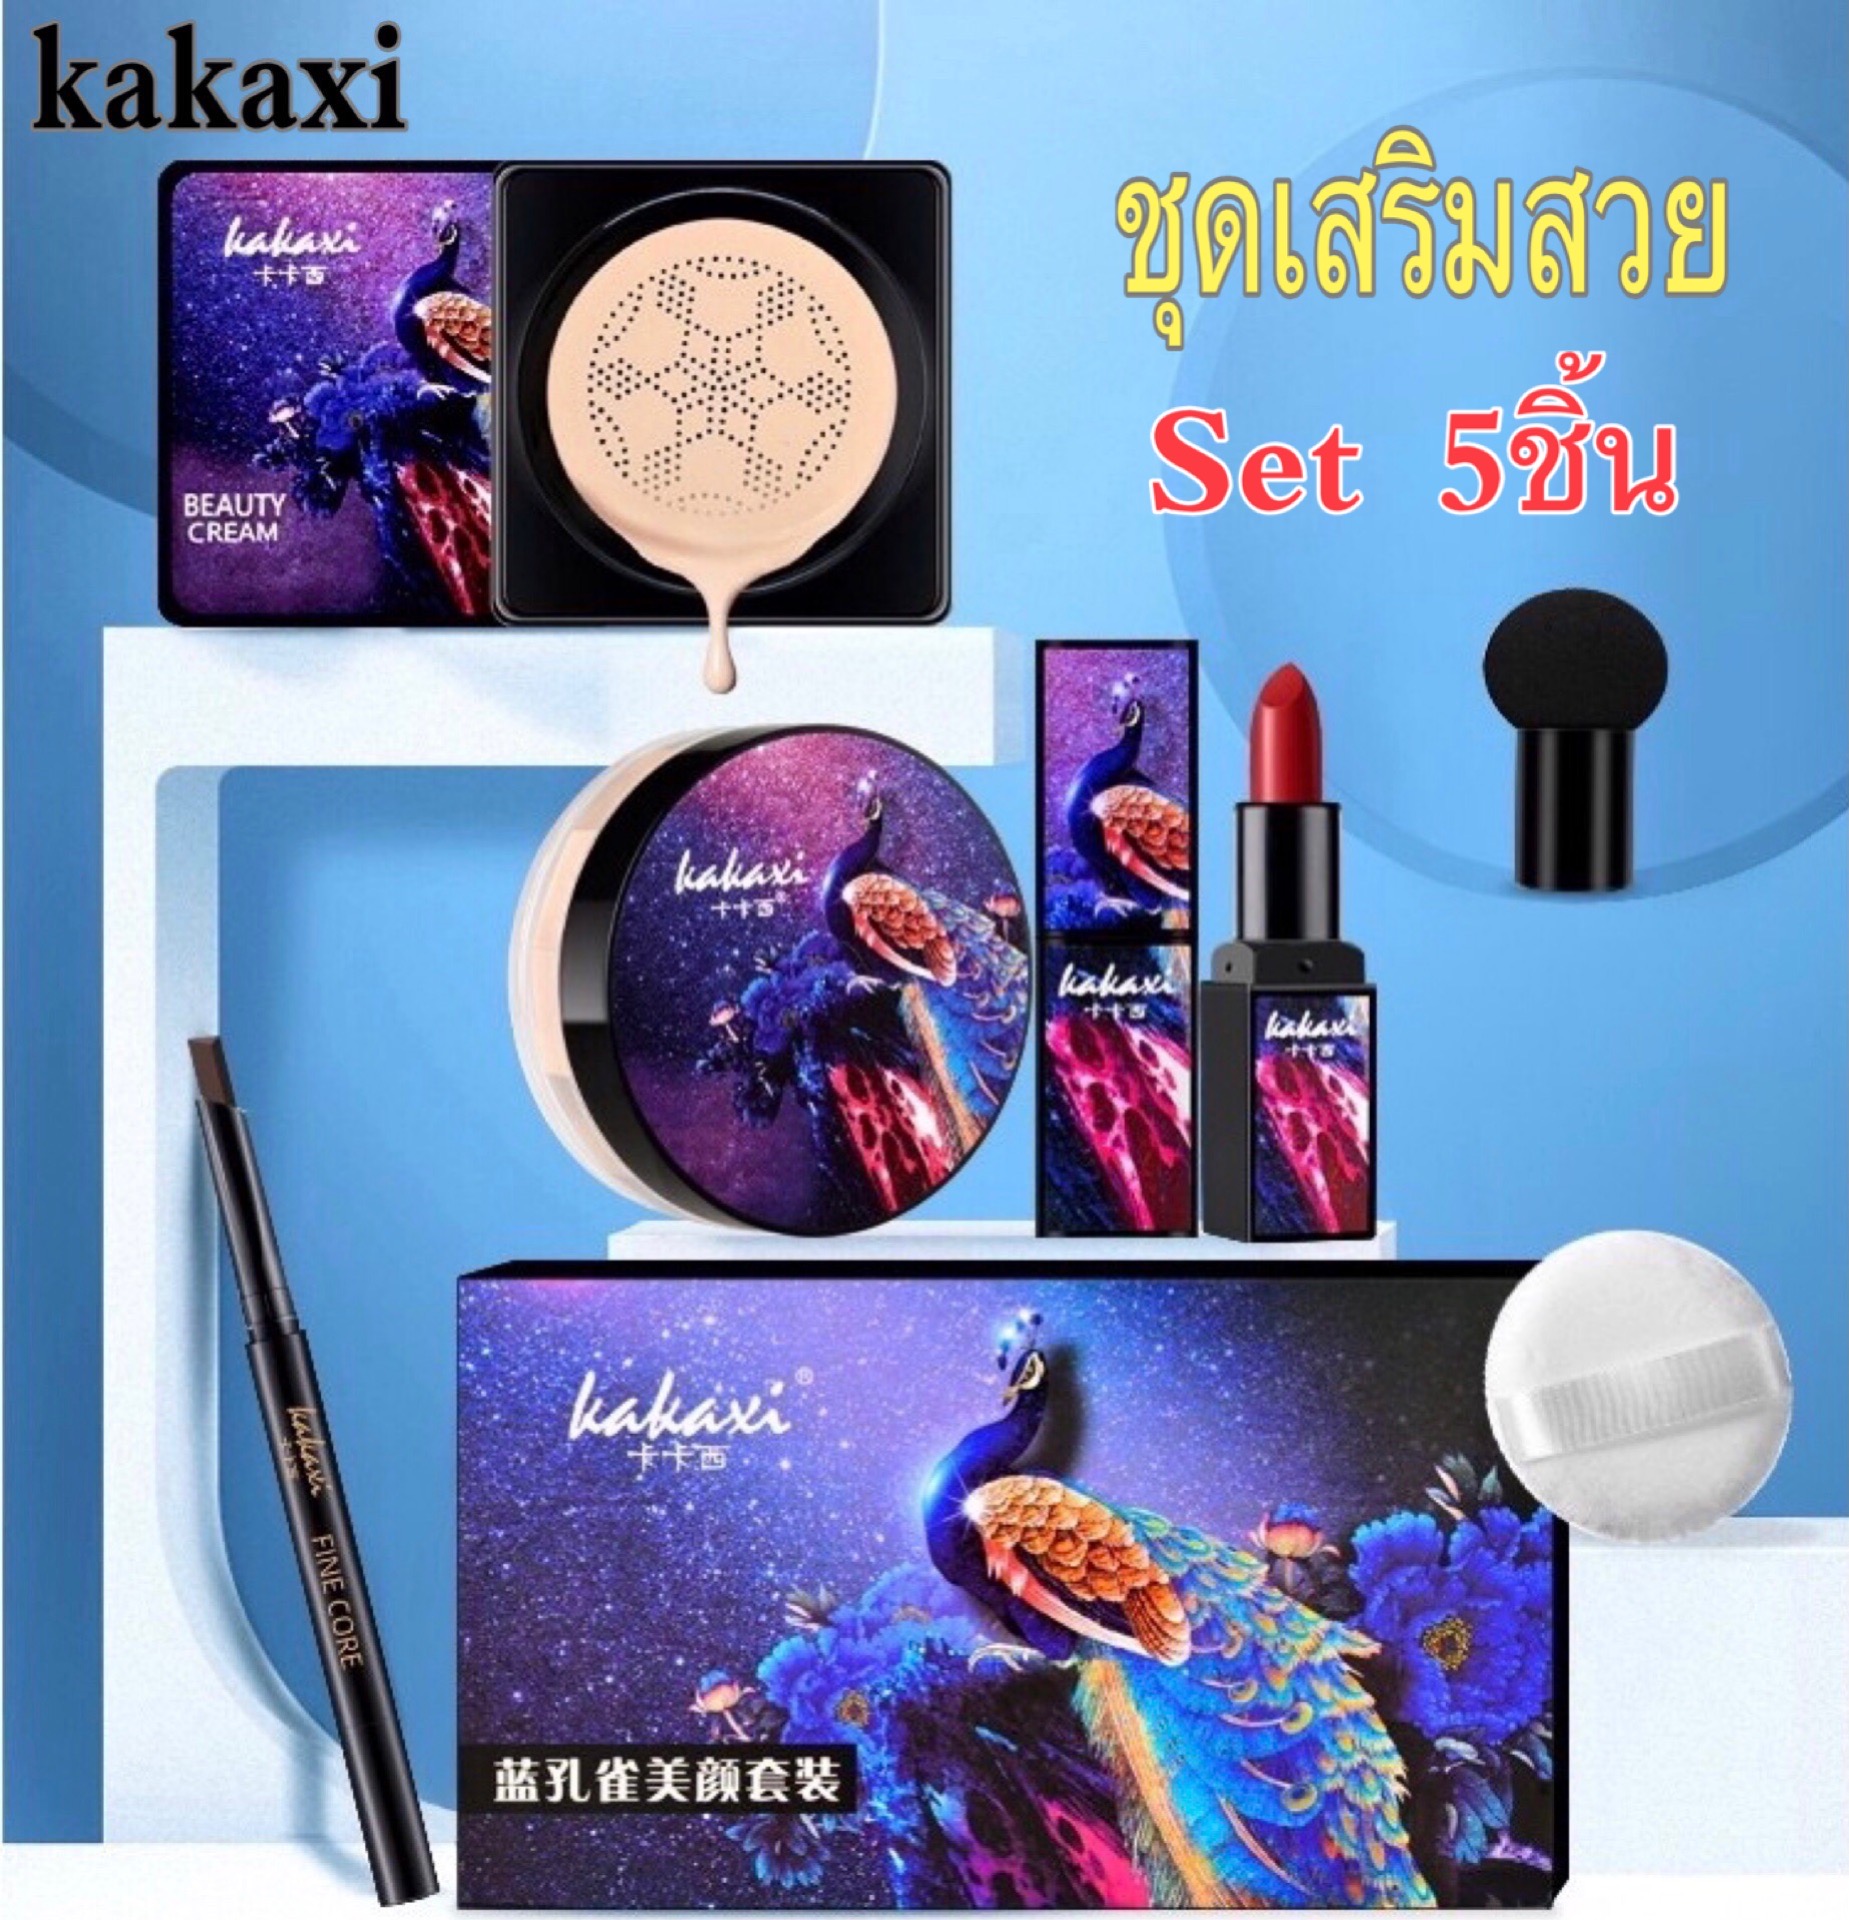 kakaxi box set 5 ชิ้นสุดคุ้ม คูชั่น  แป้งฝุ่น  ลิปสติก  ดินสอเขียนคิ้ว แปรงหัวเห็ด พัพ